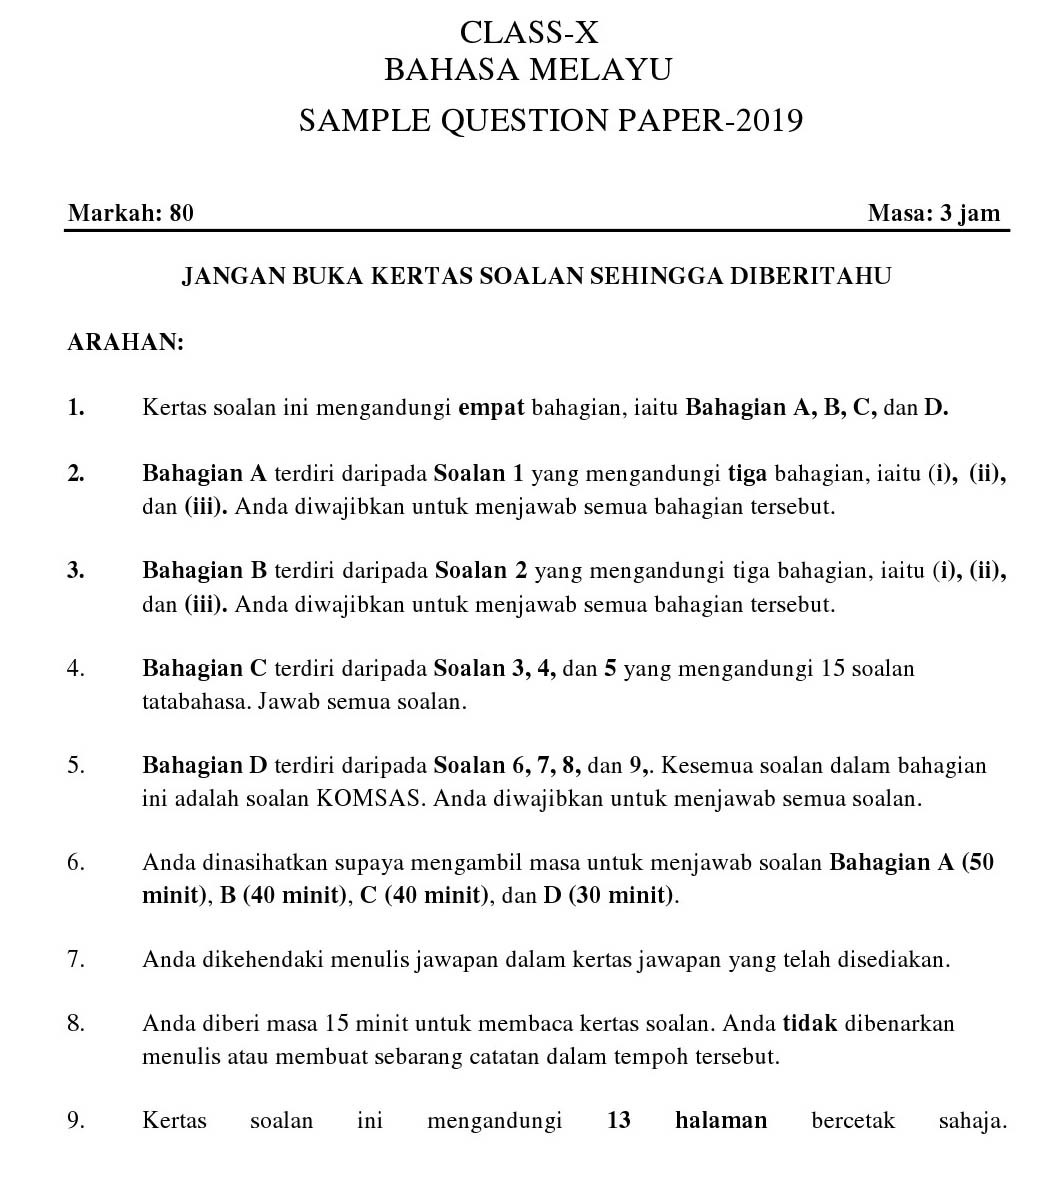 Bhasha Maleyu CBSE Class X Sample Question Paper 2018-19 - Image 1